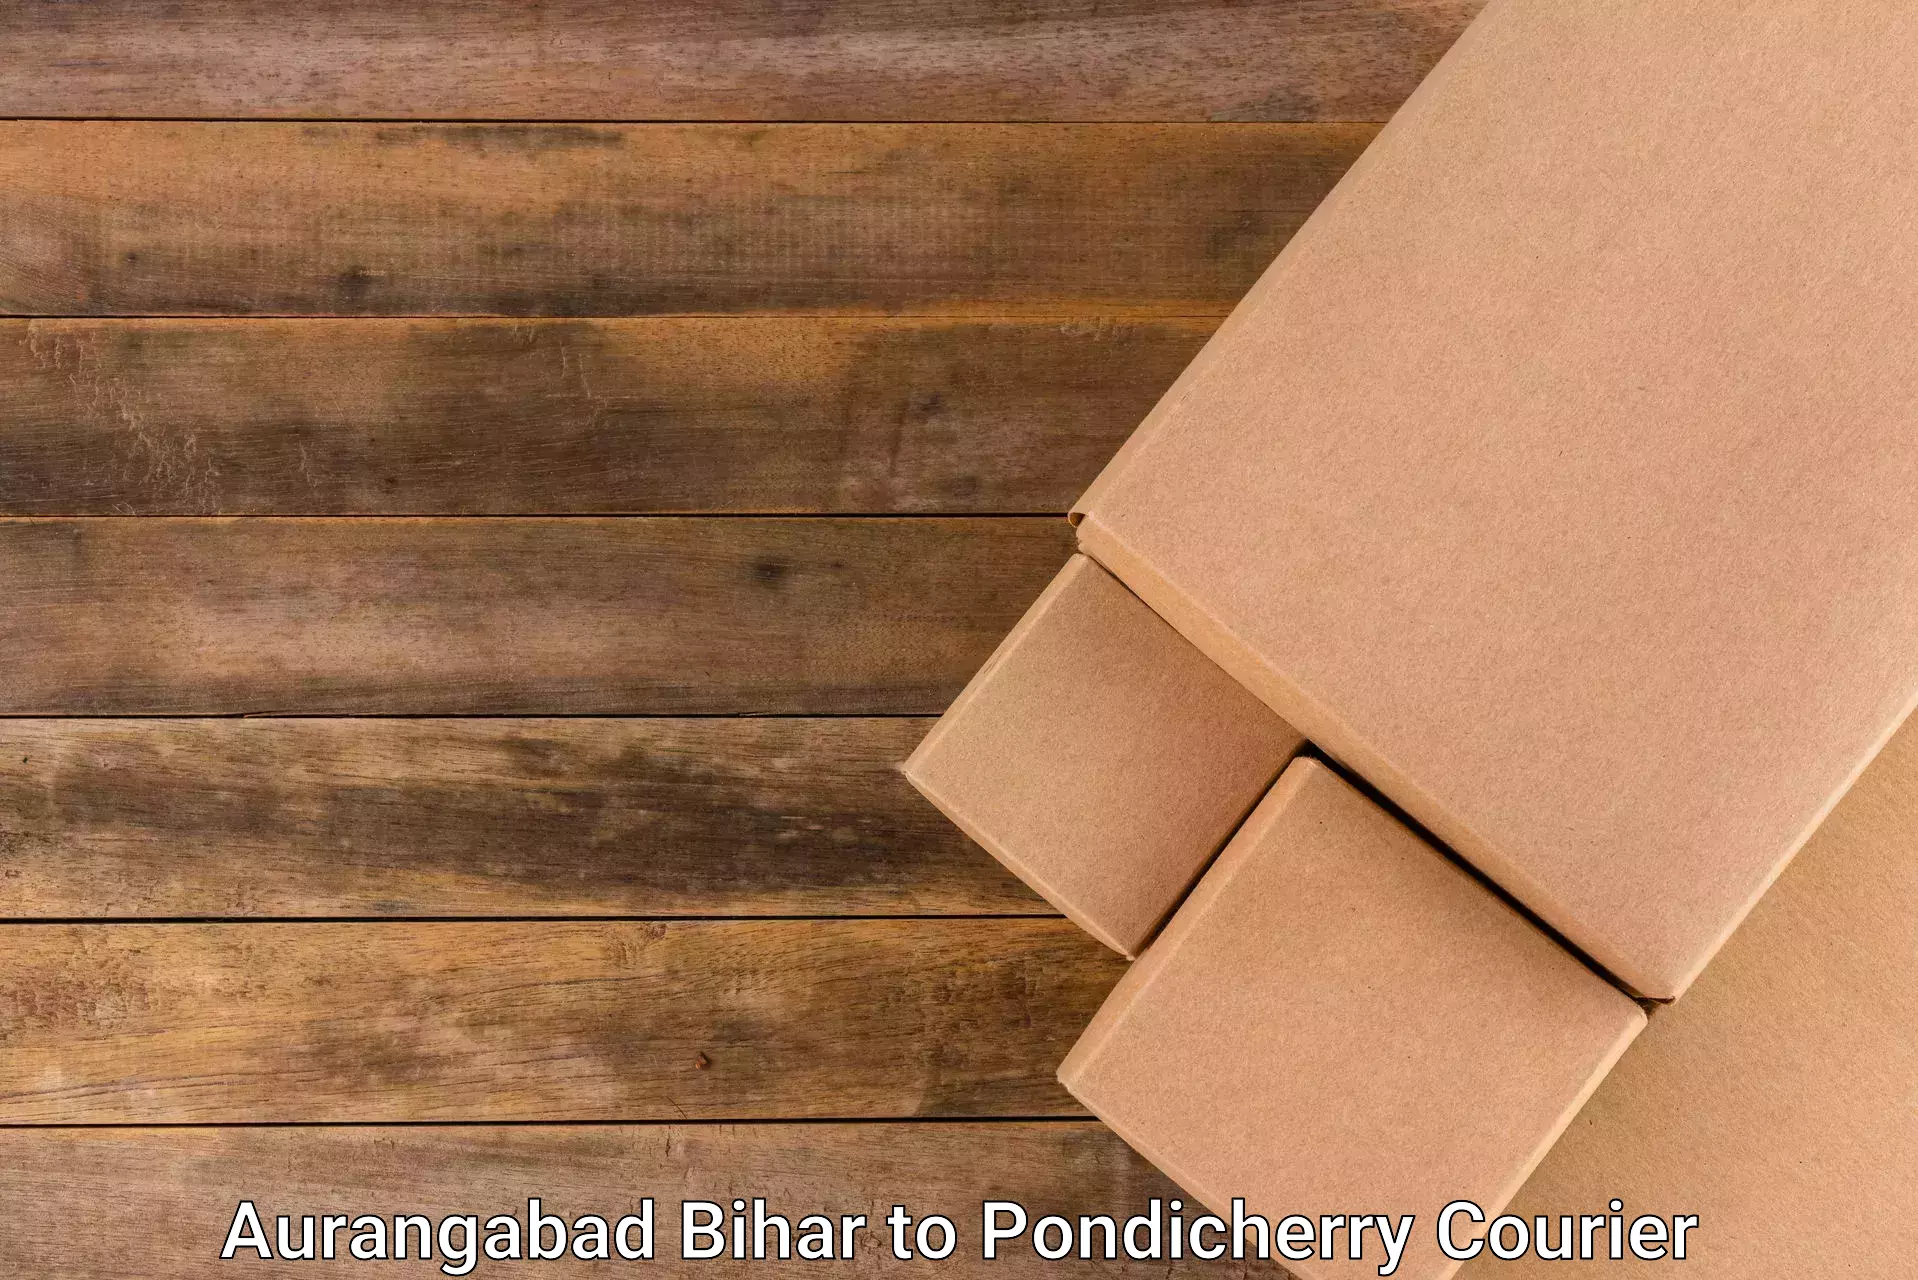 Express courier facilities in Aurangabad Bihar to Pondicherry